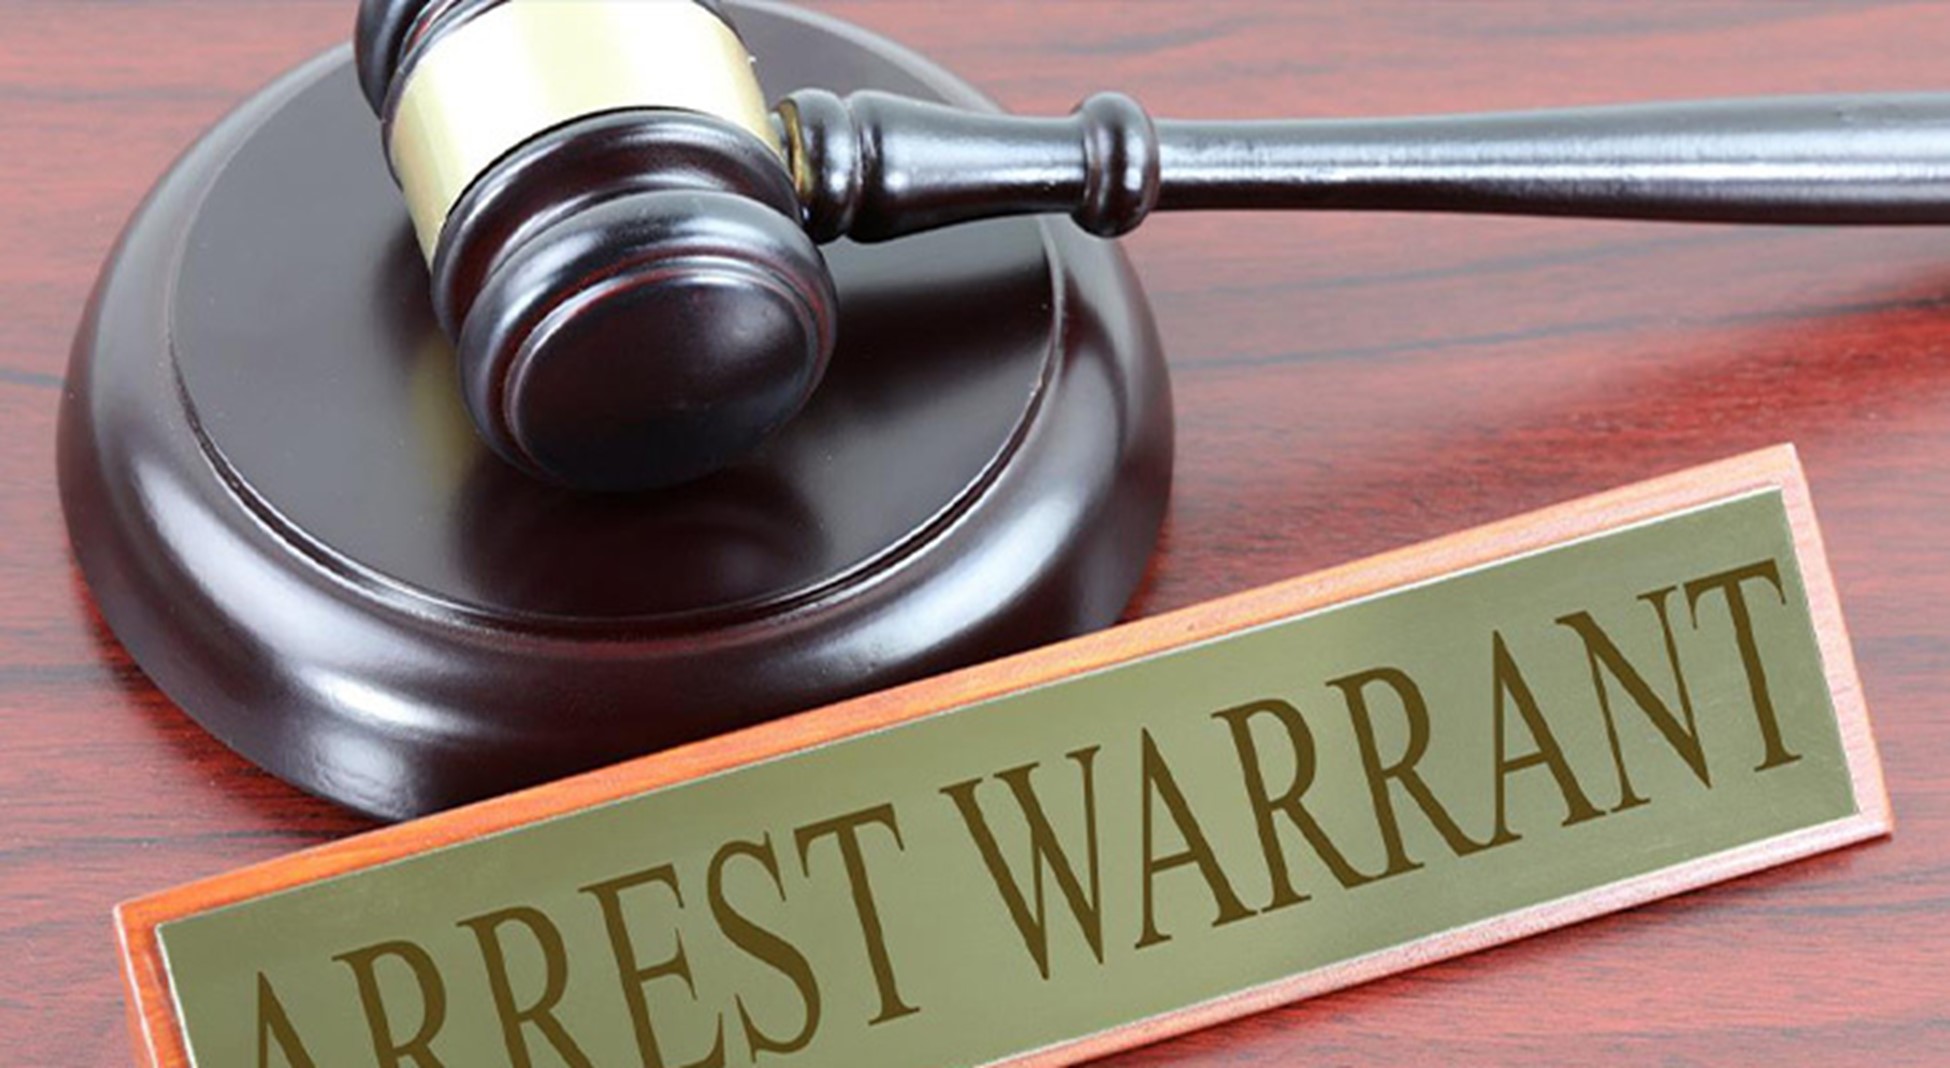 What is an Arrest Warrant